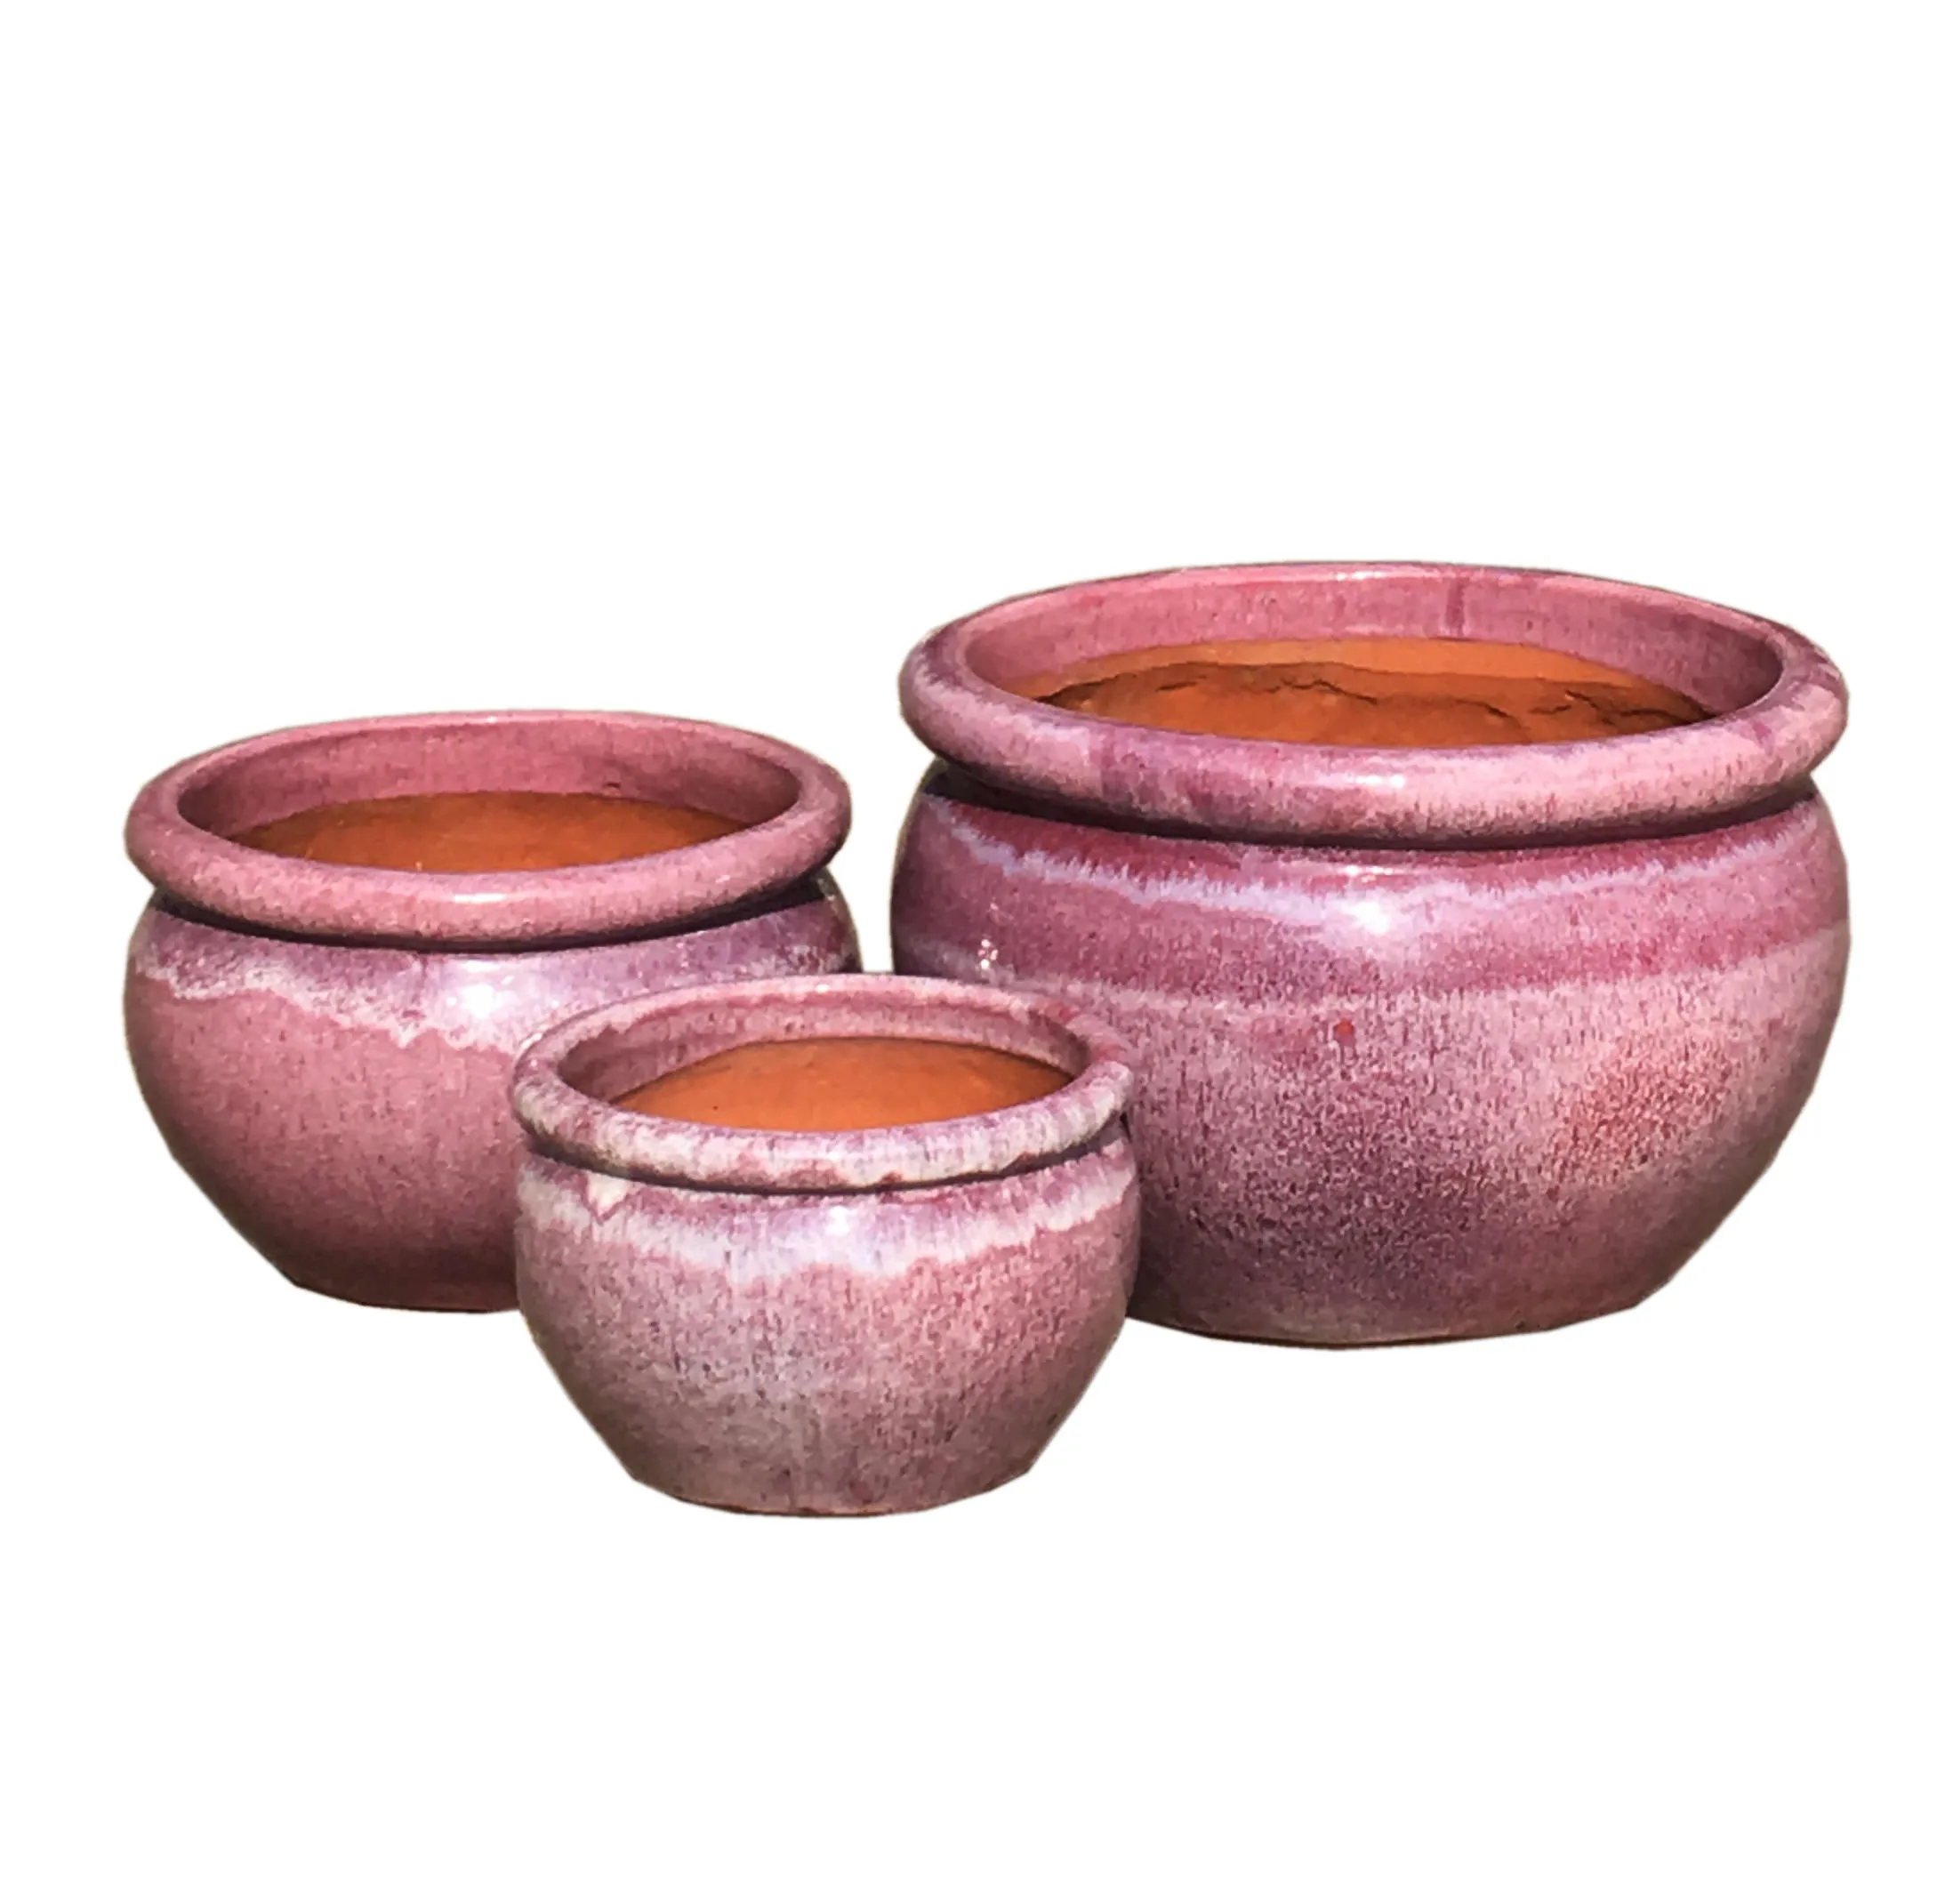 Wholesale Large Outdoor European-Style Ceramic Flower Pots Kit Glazed Pottery Design Garden Plant Planter Home Nursery Room Use